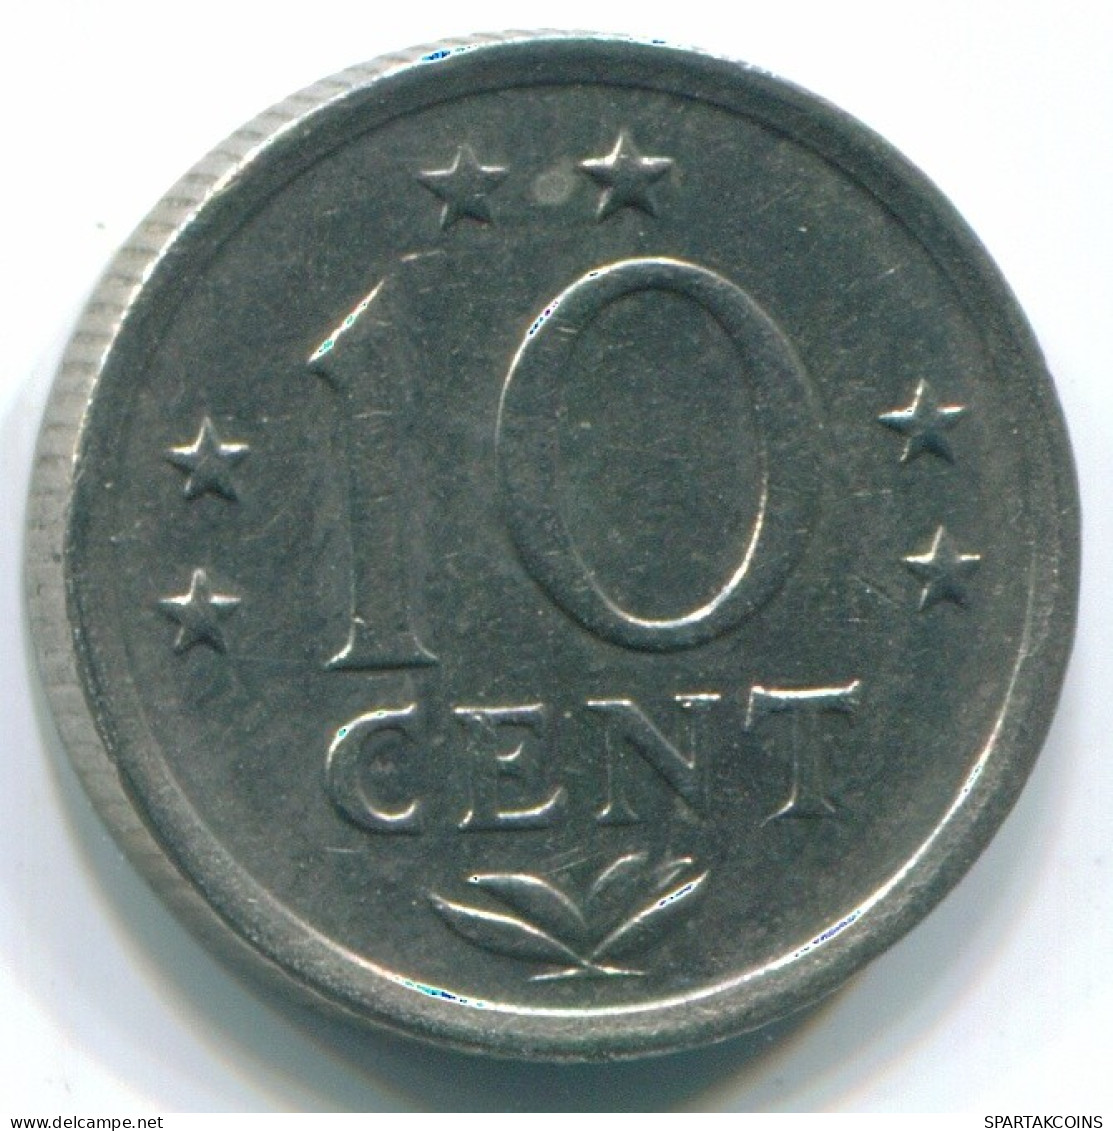 10 CENTS 1970 NETHERLANDS ANTILLES Nickel Colonial Coin #S13353.U.A - Antilles Néerlandaises